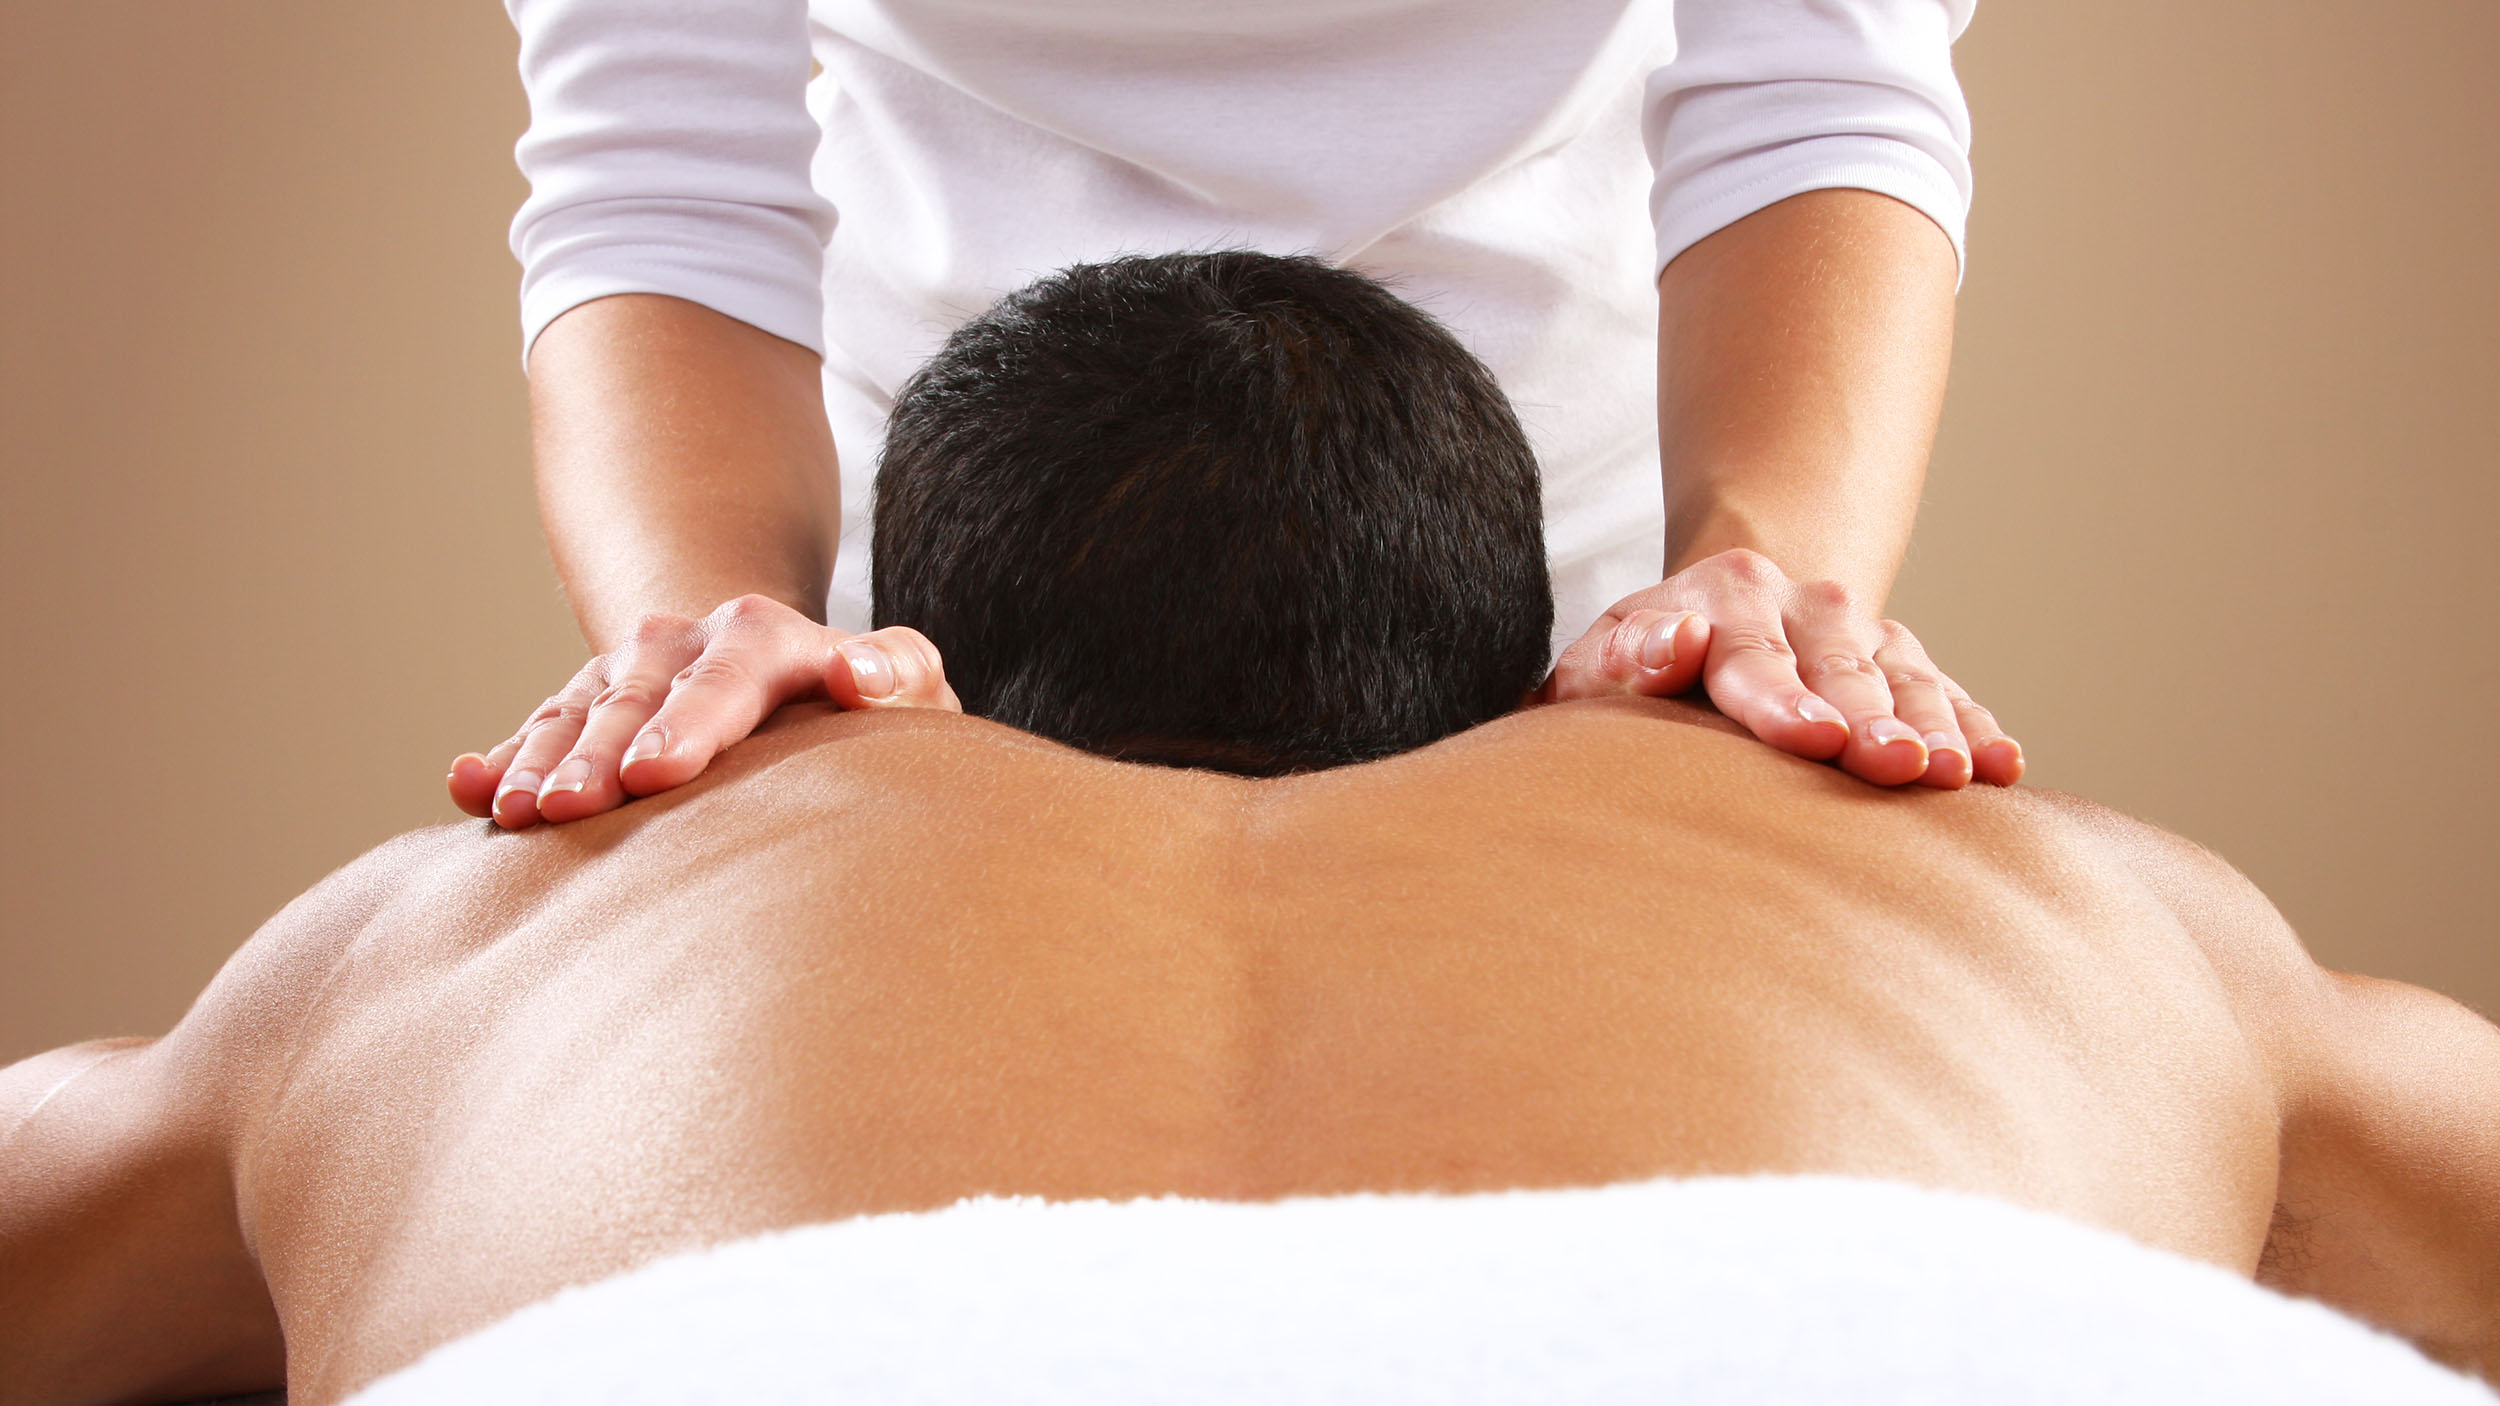 Massage therapist. Массаж спины. Общий массаж. Массаж мужской спины. Классический массаж спины.